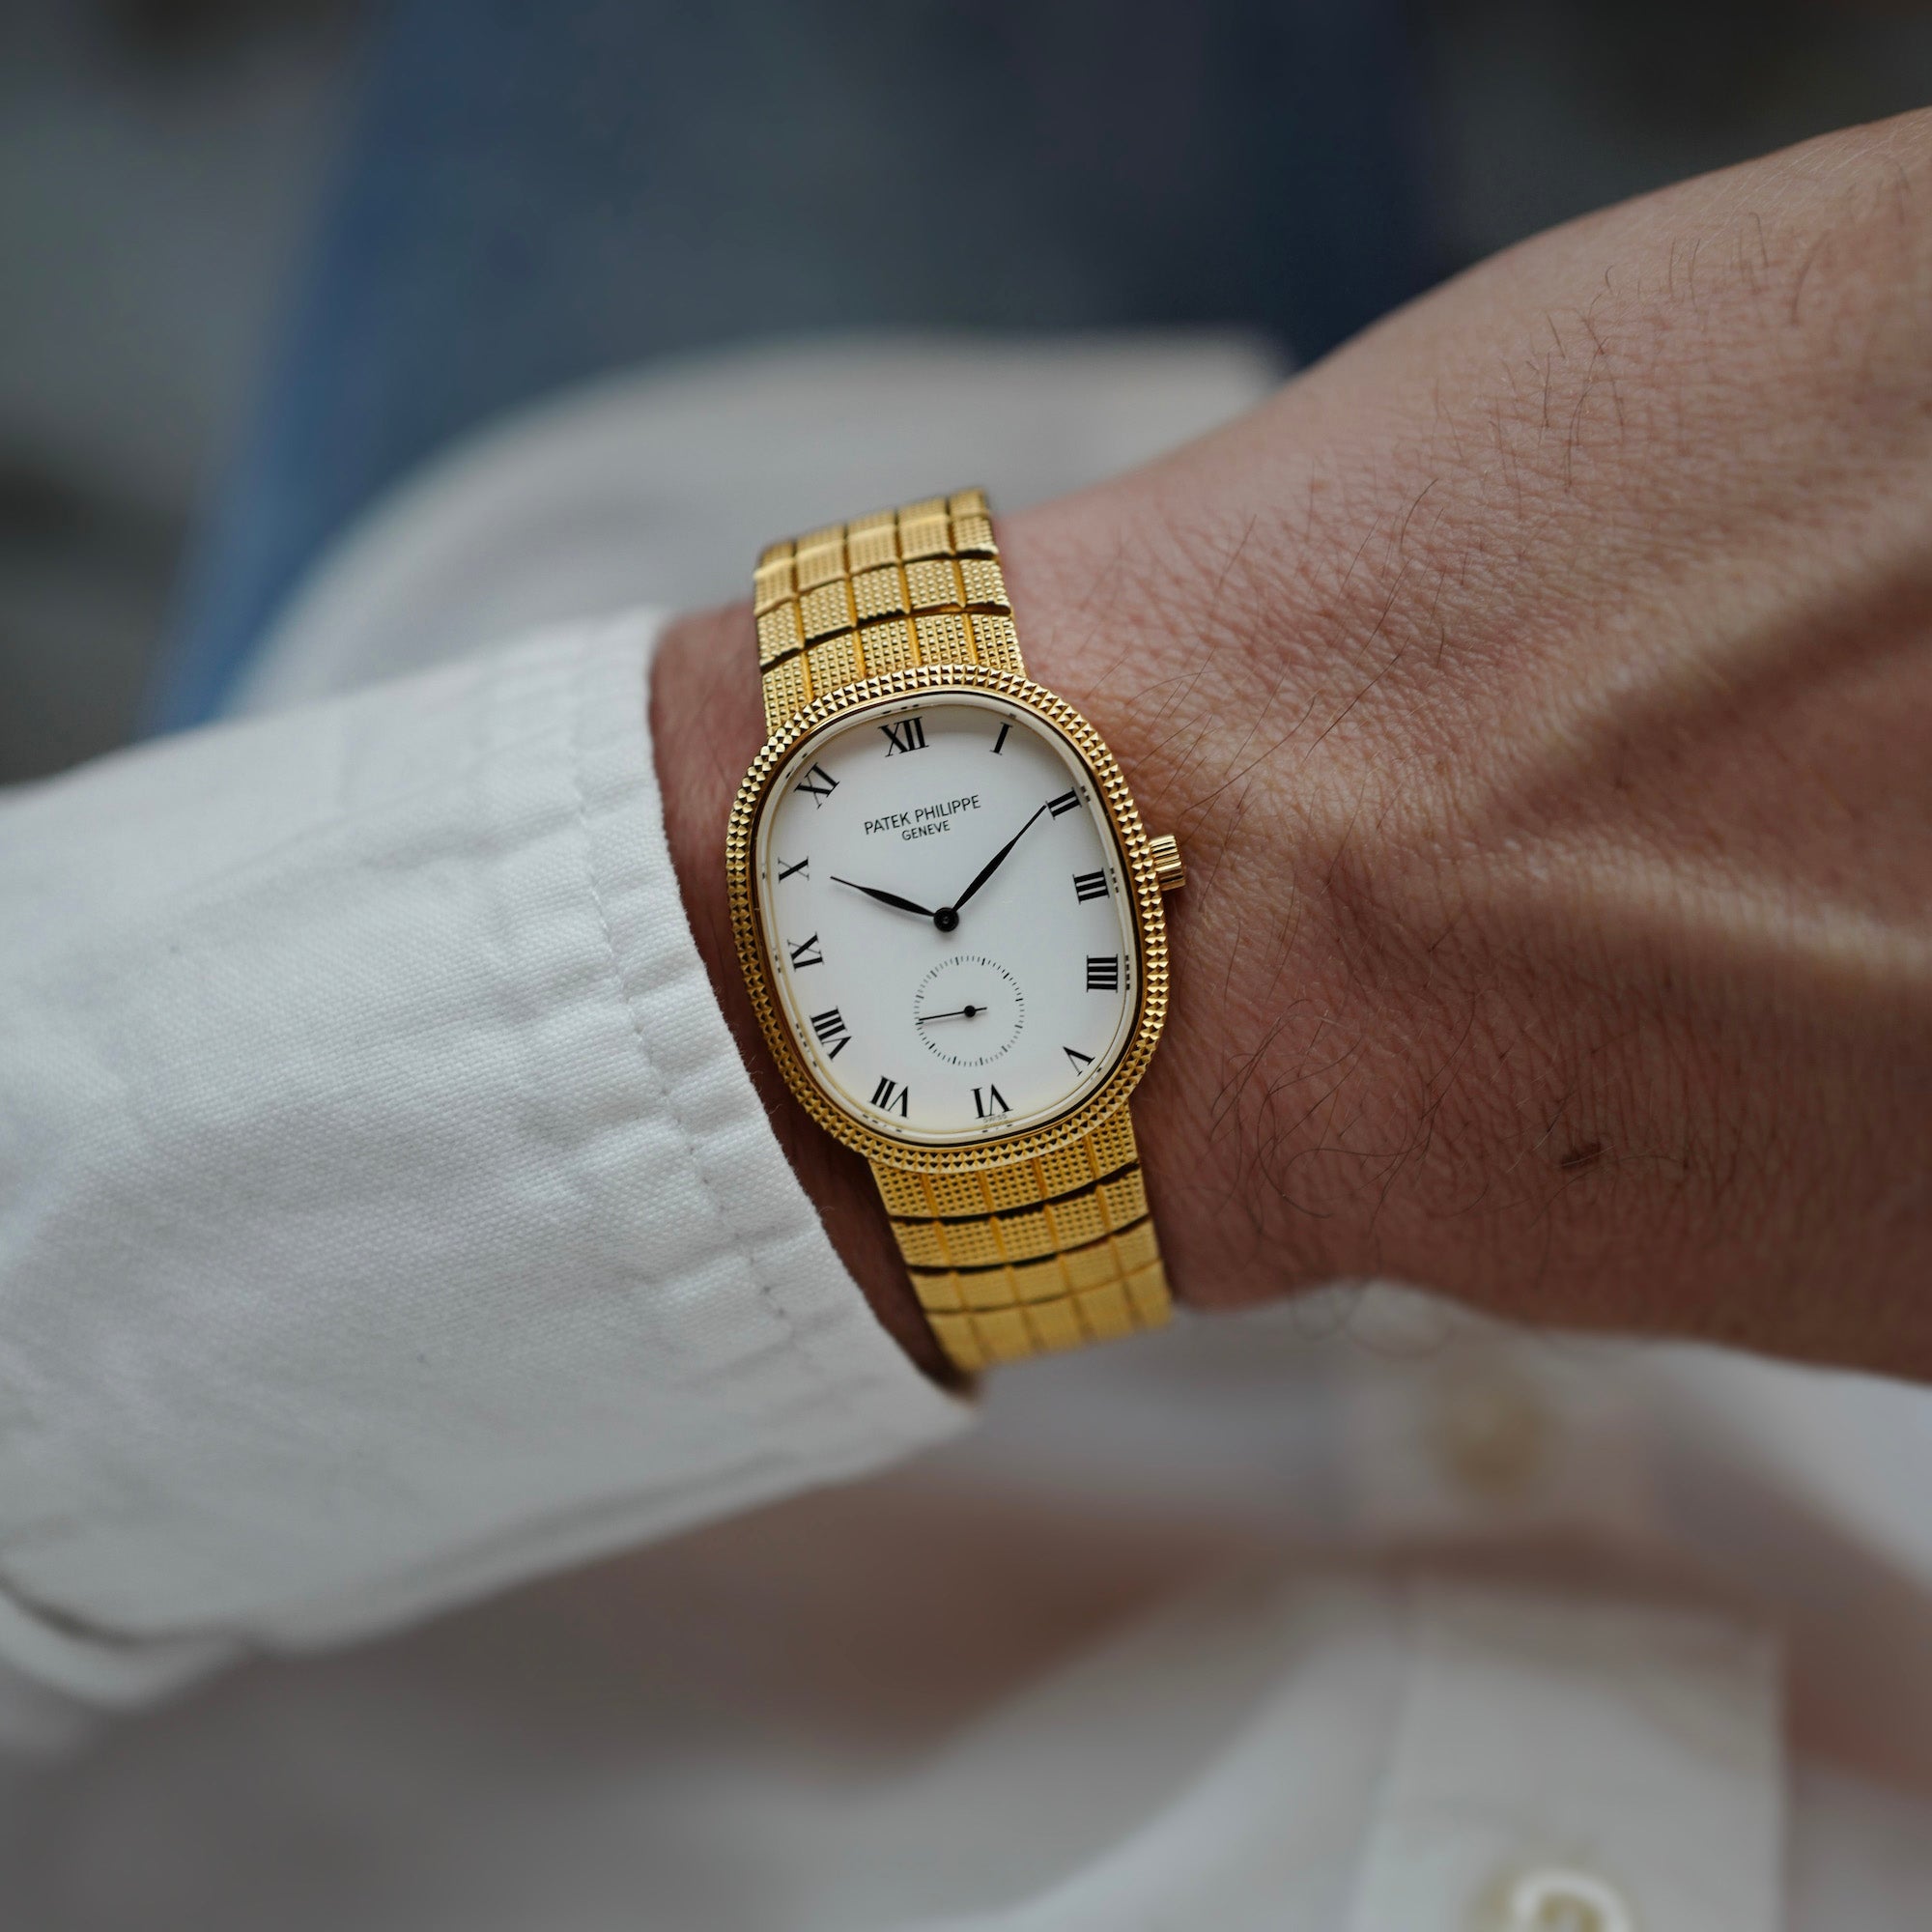 Patek Philippe - Patek Philippe Yellow Gold Ellipse Watch Ref. 3987 - The Keystone Watches